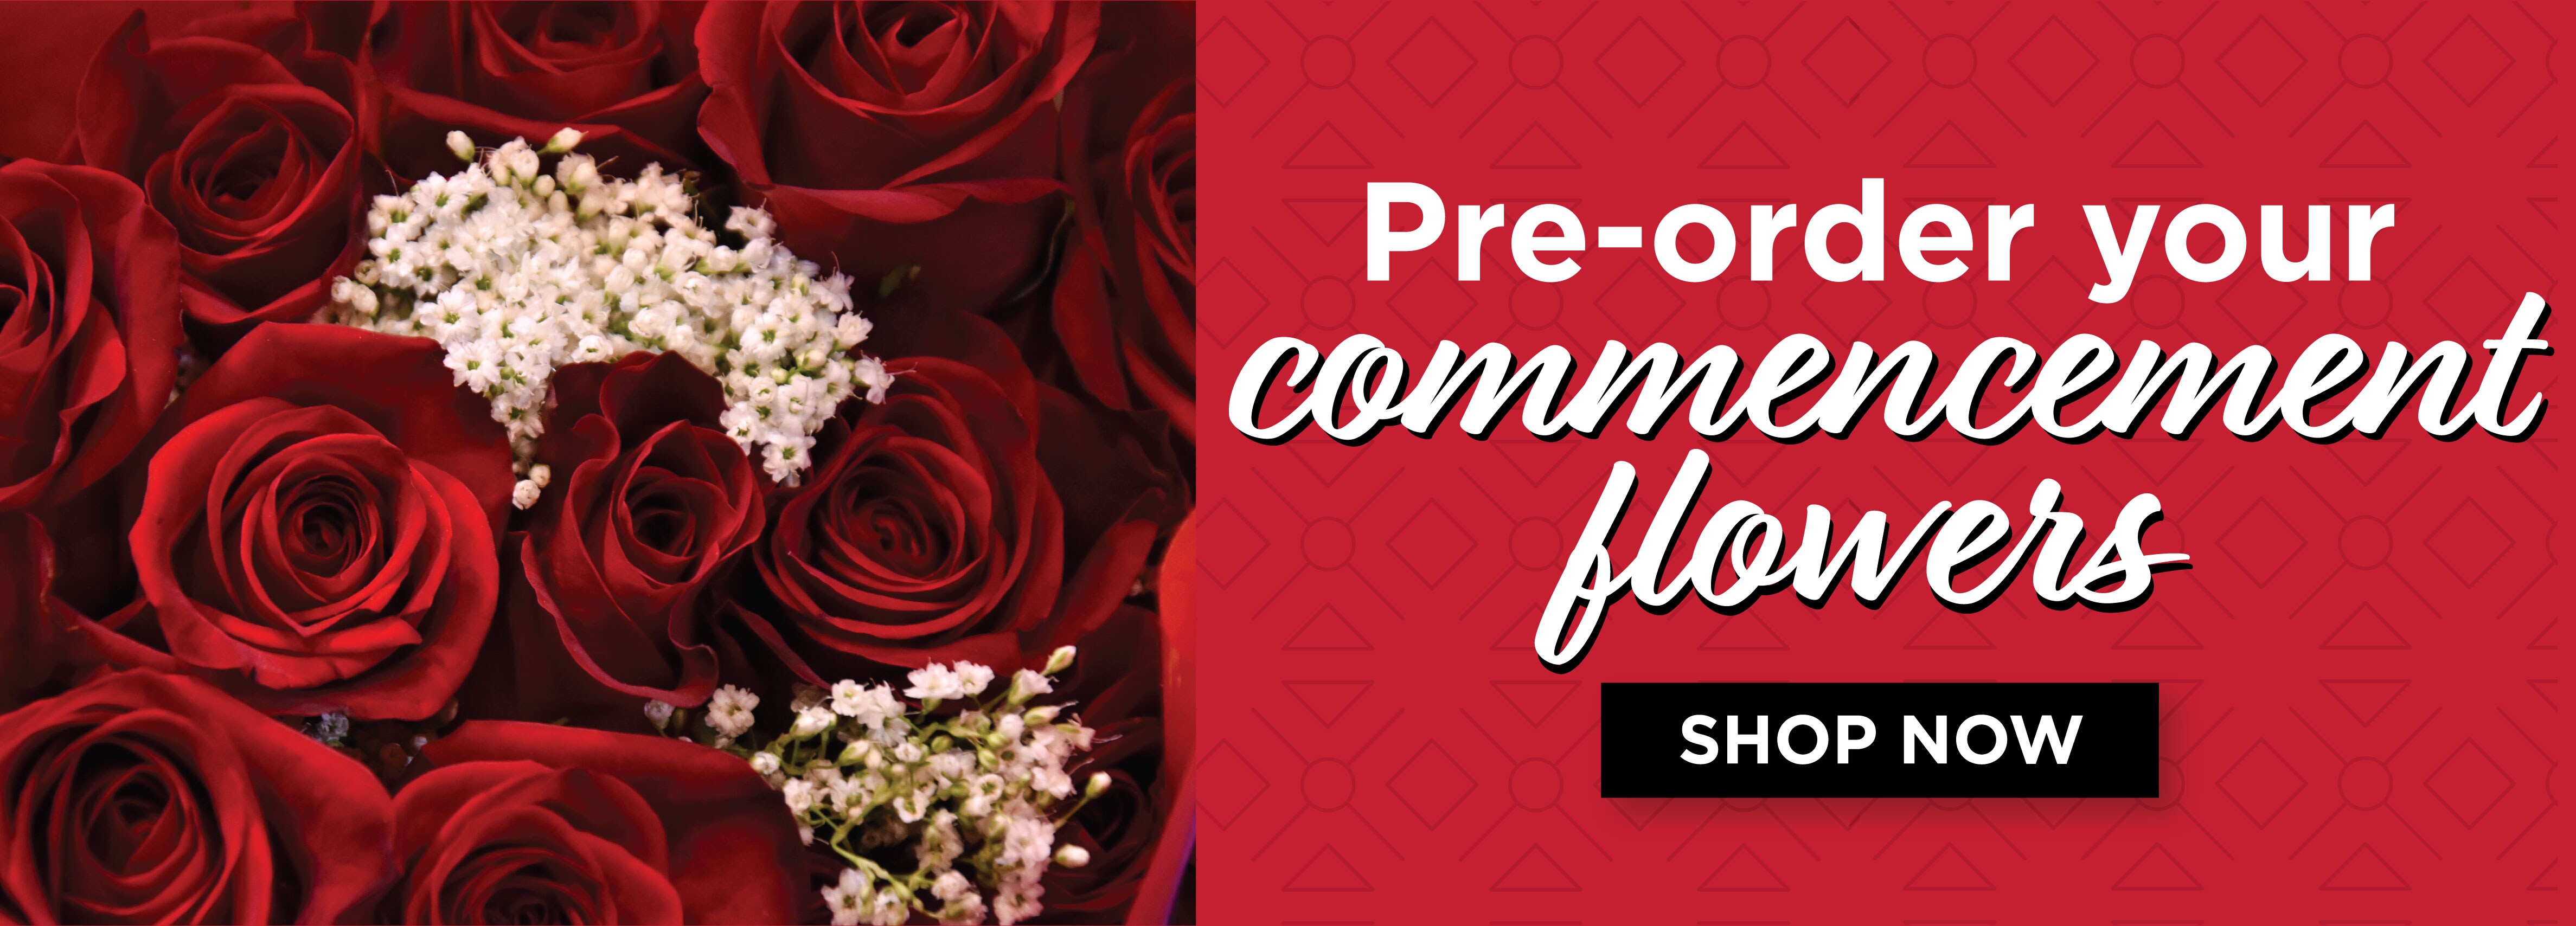 Pre-order your  Commencement Flowers Shop Now